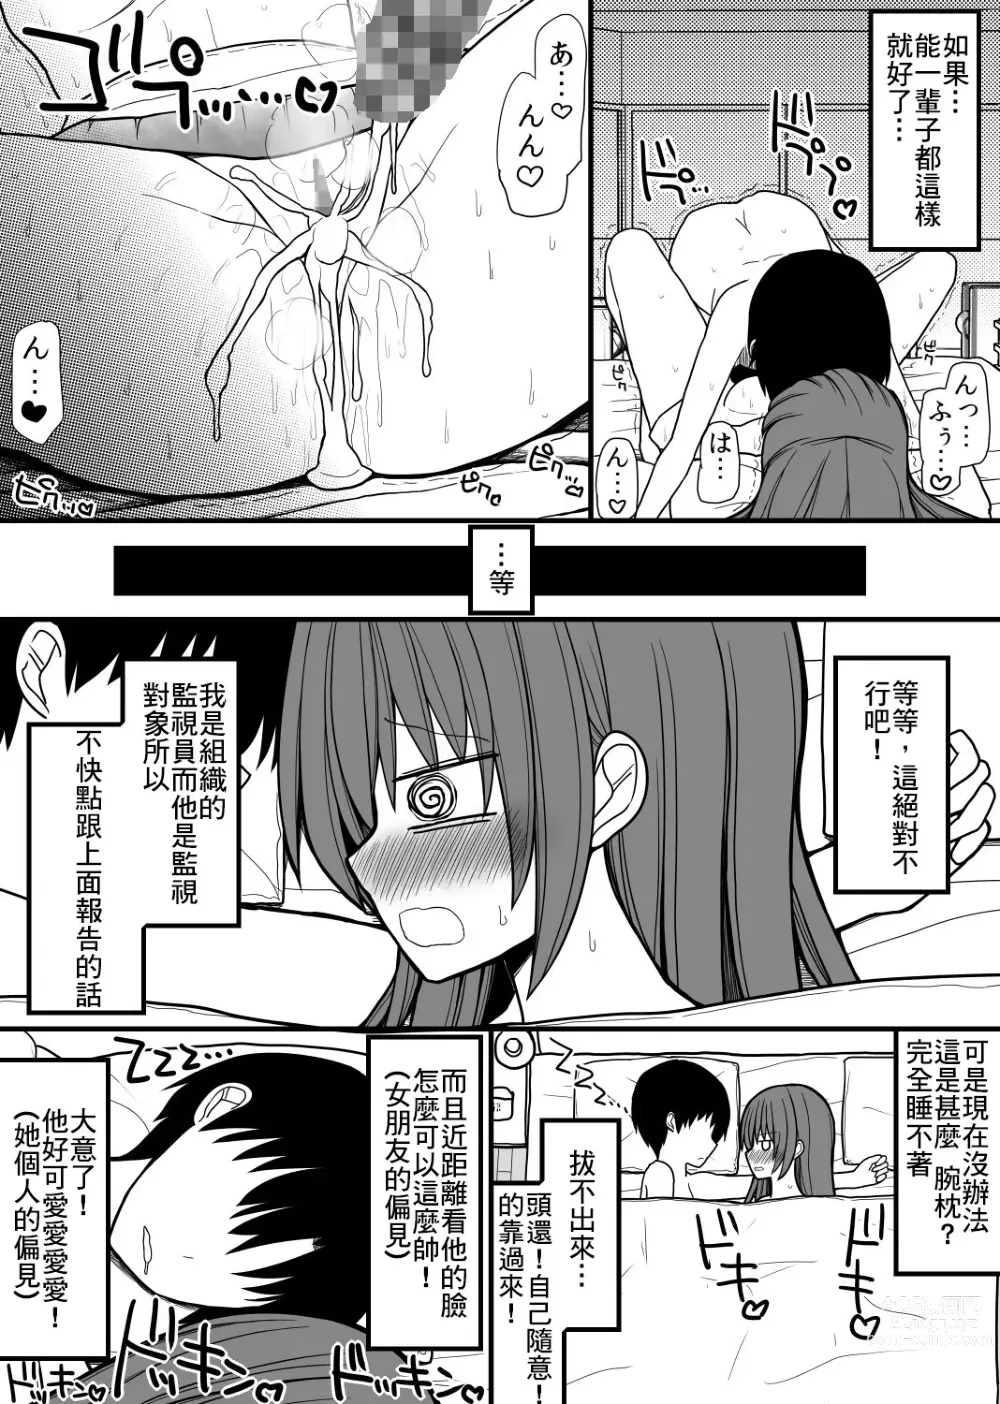 Page 12 of doujinshi 超能力を使える少年と監視員の少女